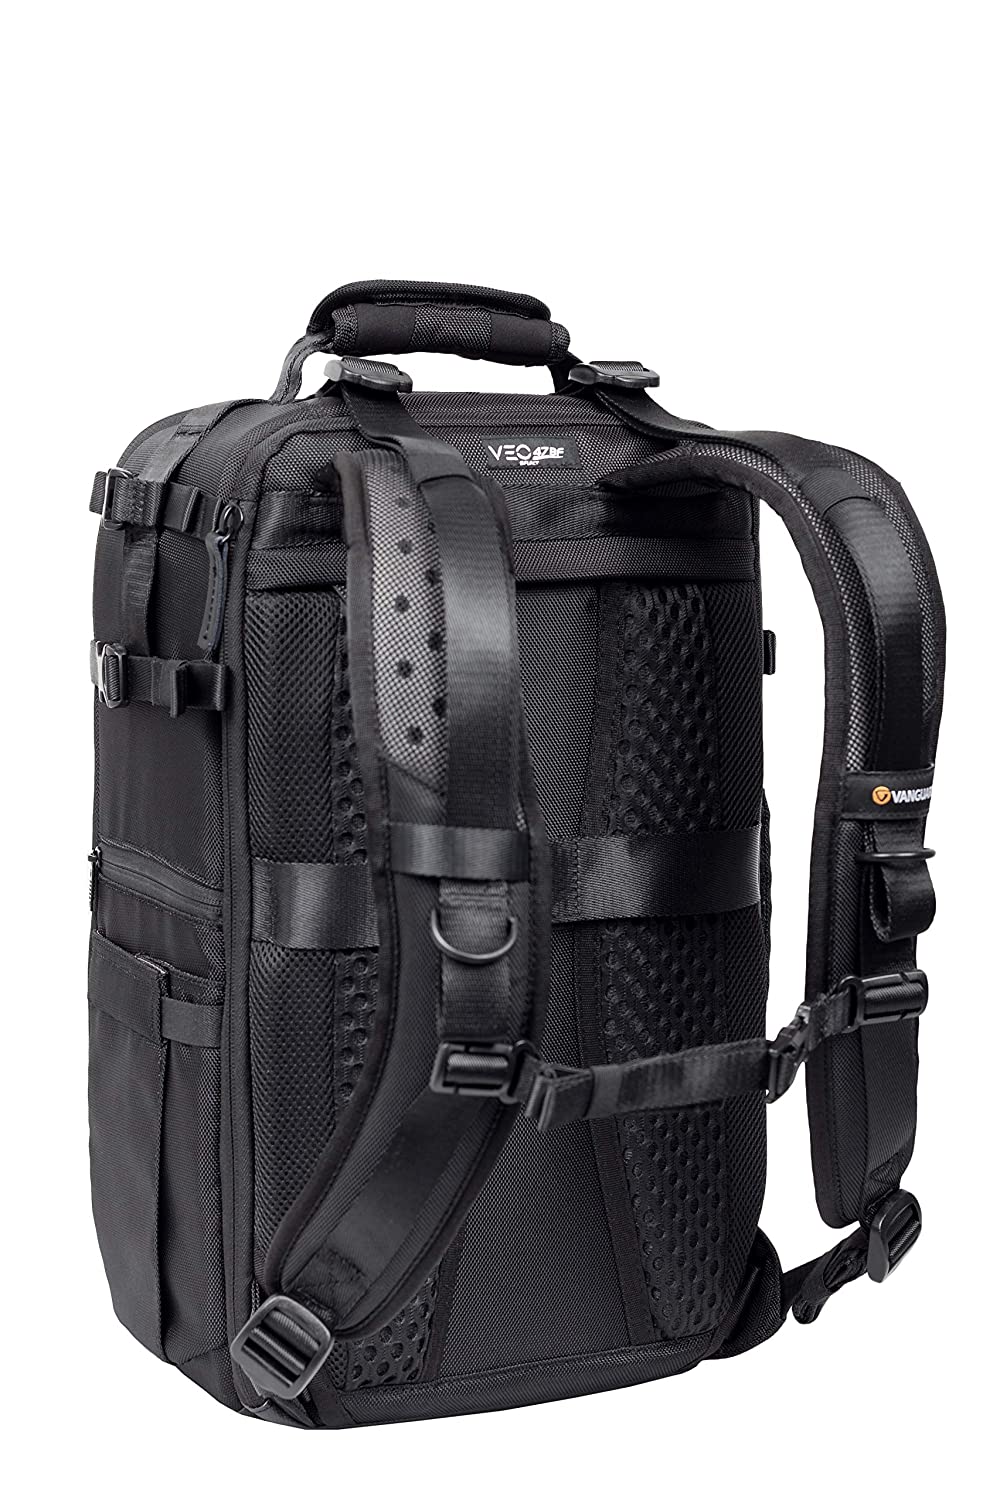 Vanguard Veo Select 55BT Trolley Camera Bag